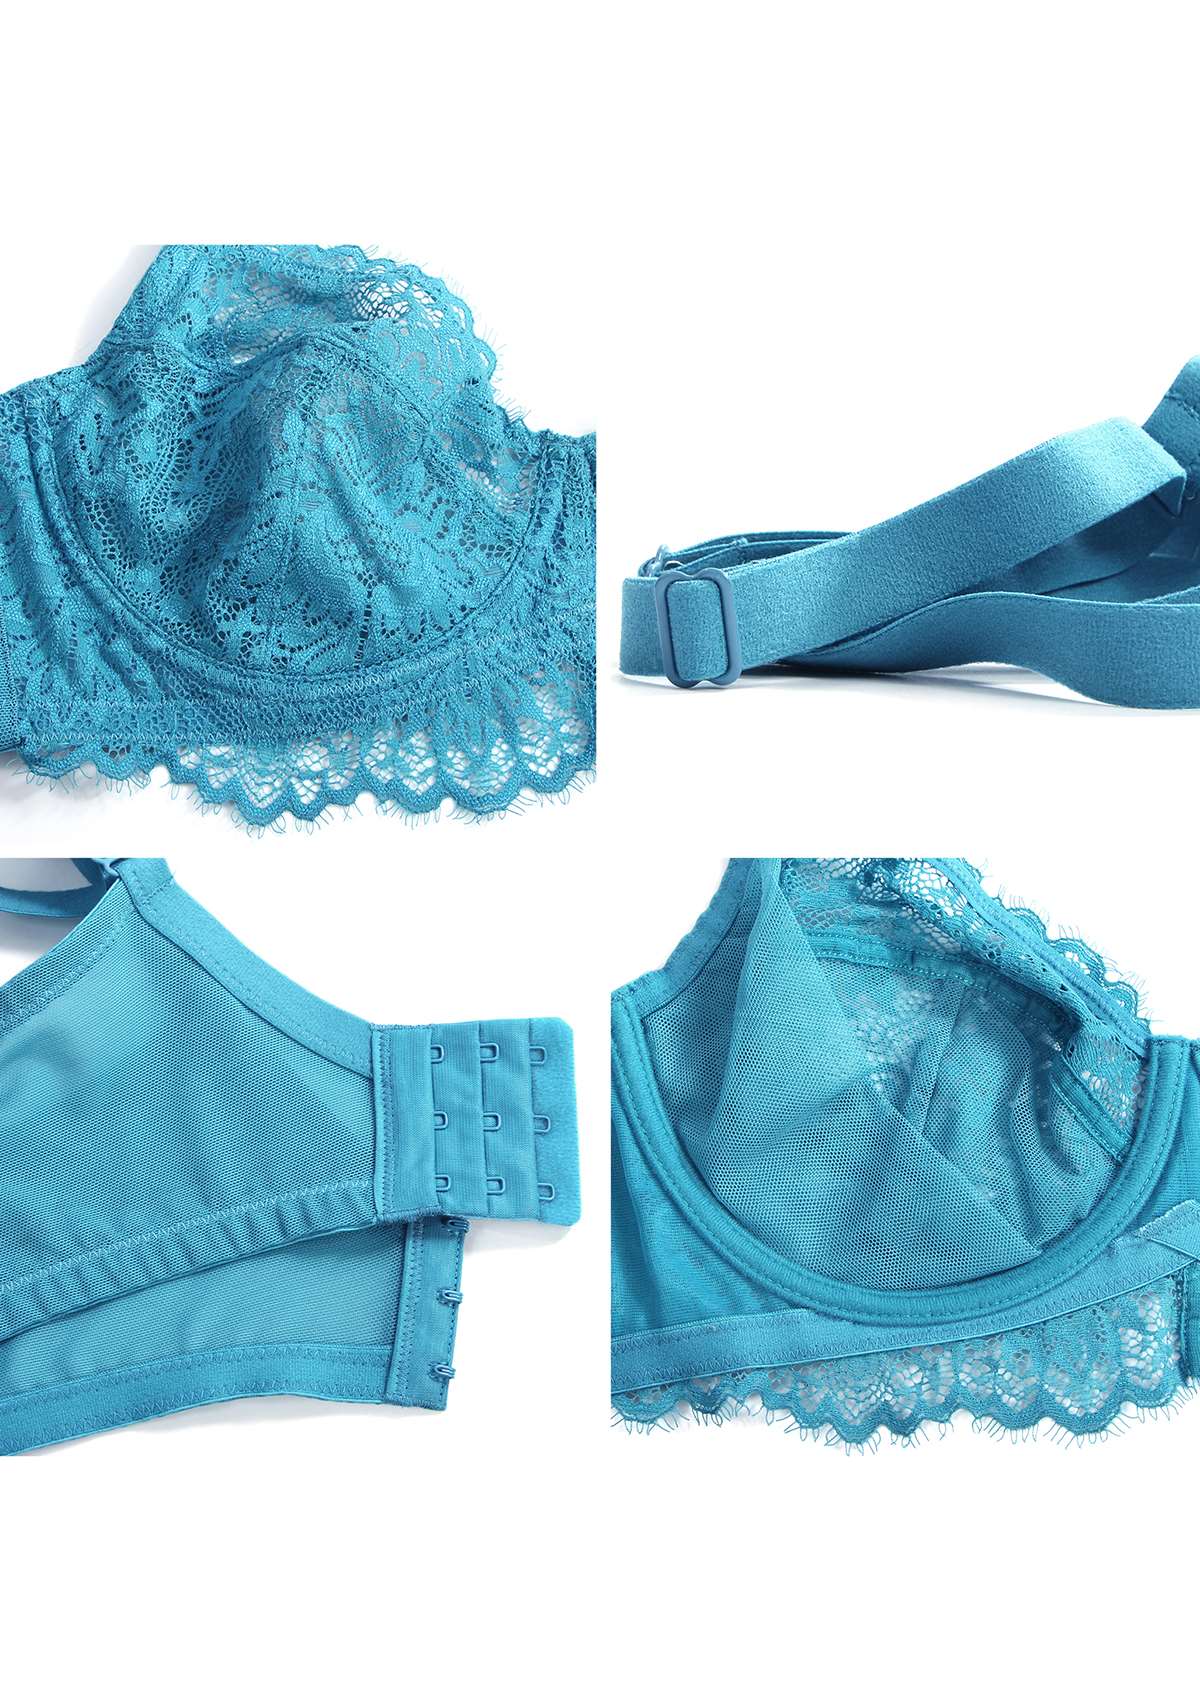 HSIA Sunflower Lace Bra And Panty: Cute Plus Size Comfort Bra - Horizon Blue / 44 / H